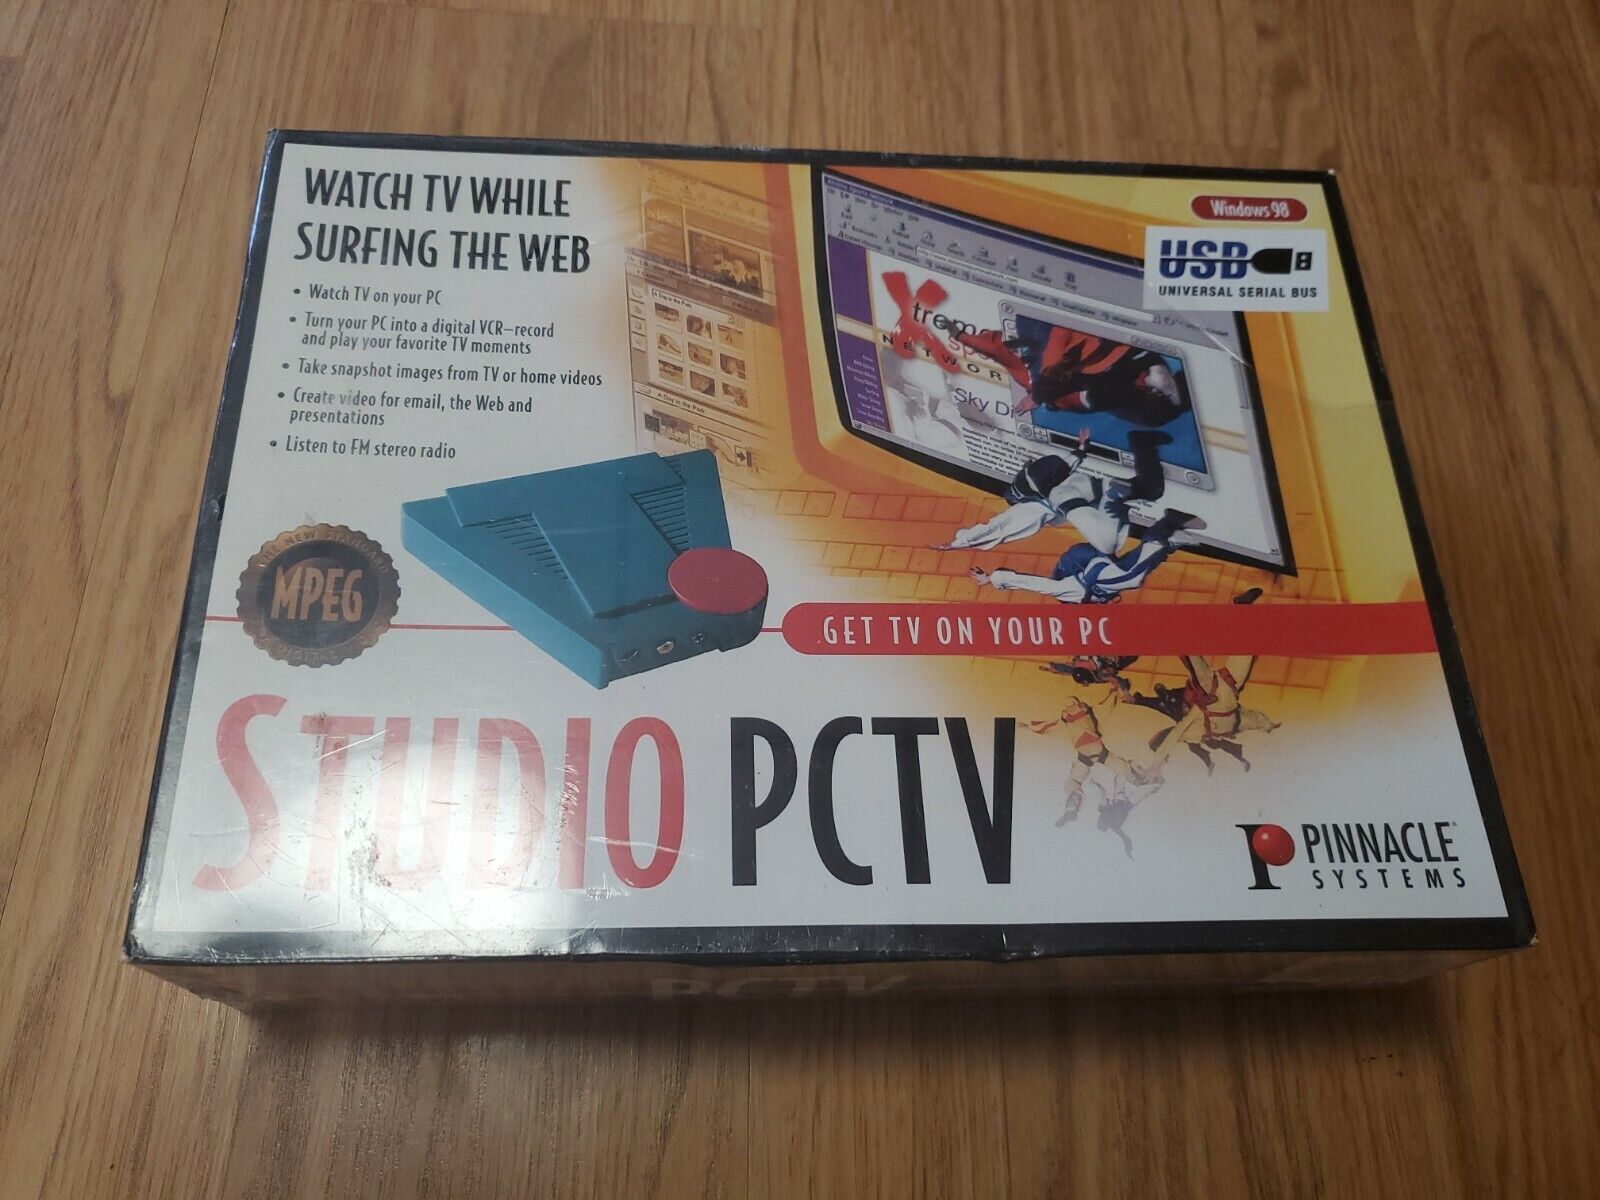 Vtg 90s Pinnacle Studio Pctv, USB Converter New/Sealed Windows 98. Get TV on PC